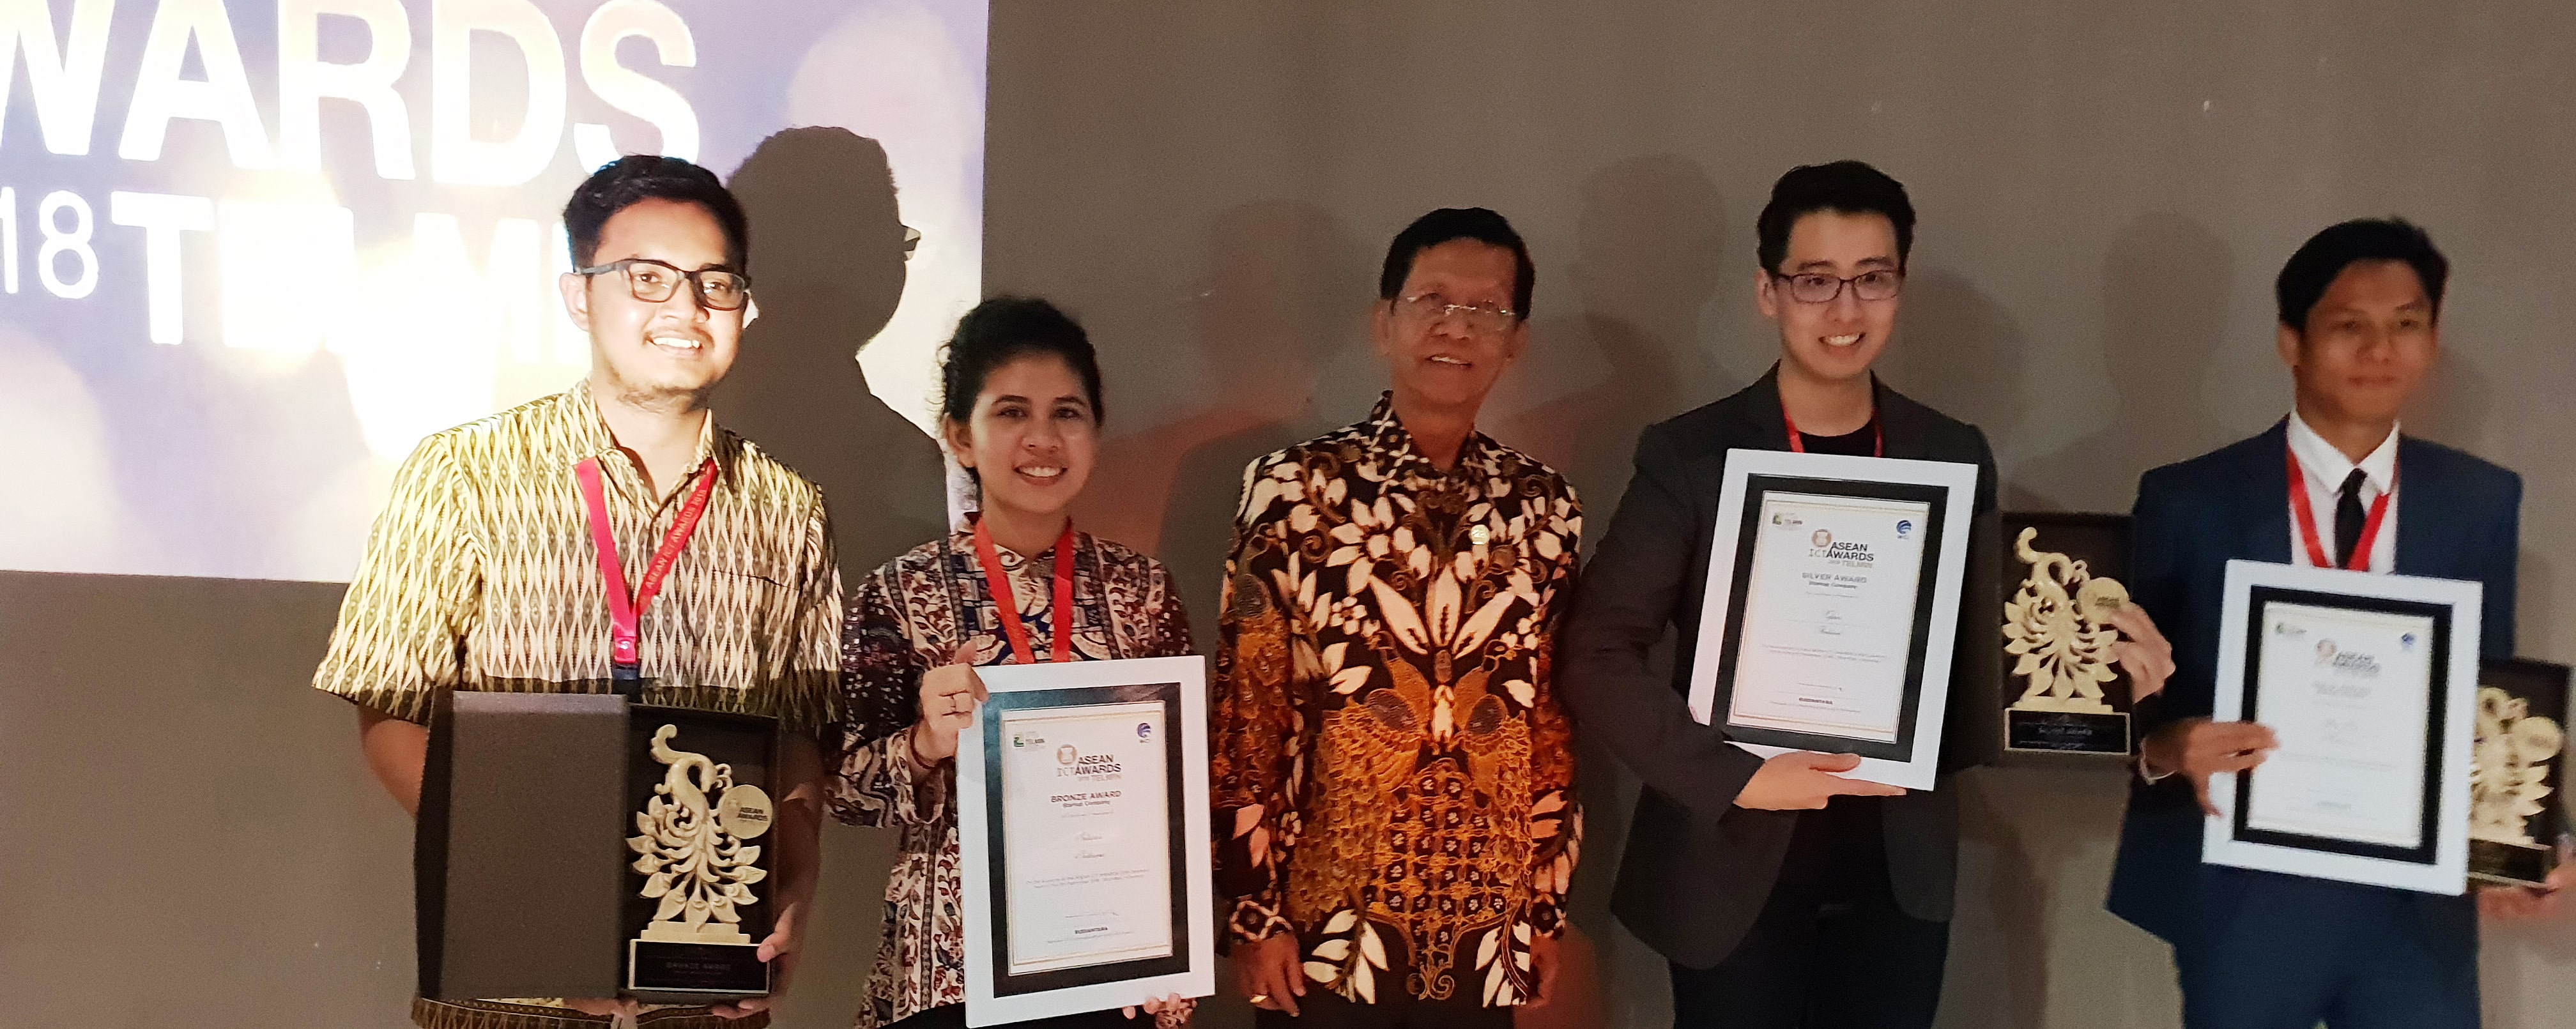 JUARA STARTUP ASEAN AWARDS AICTA Bali Indonesia 2018